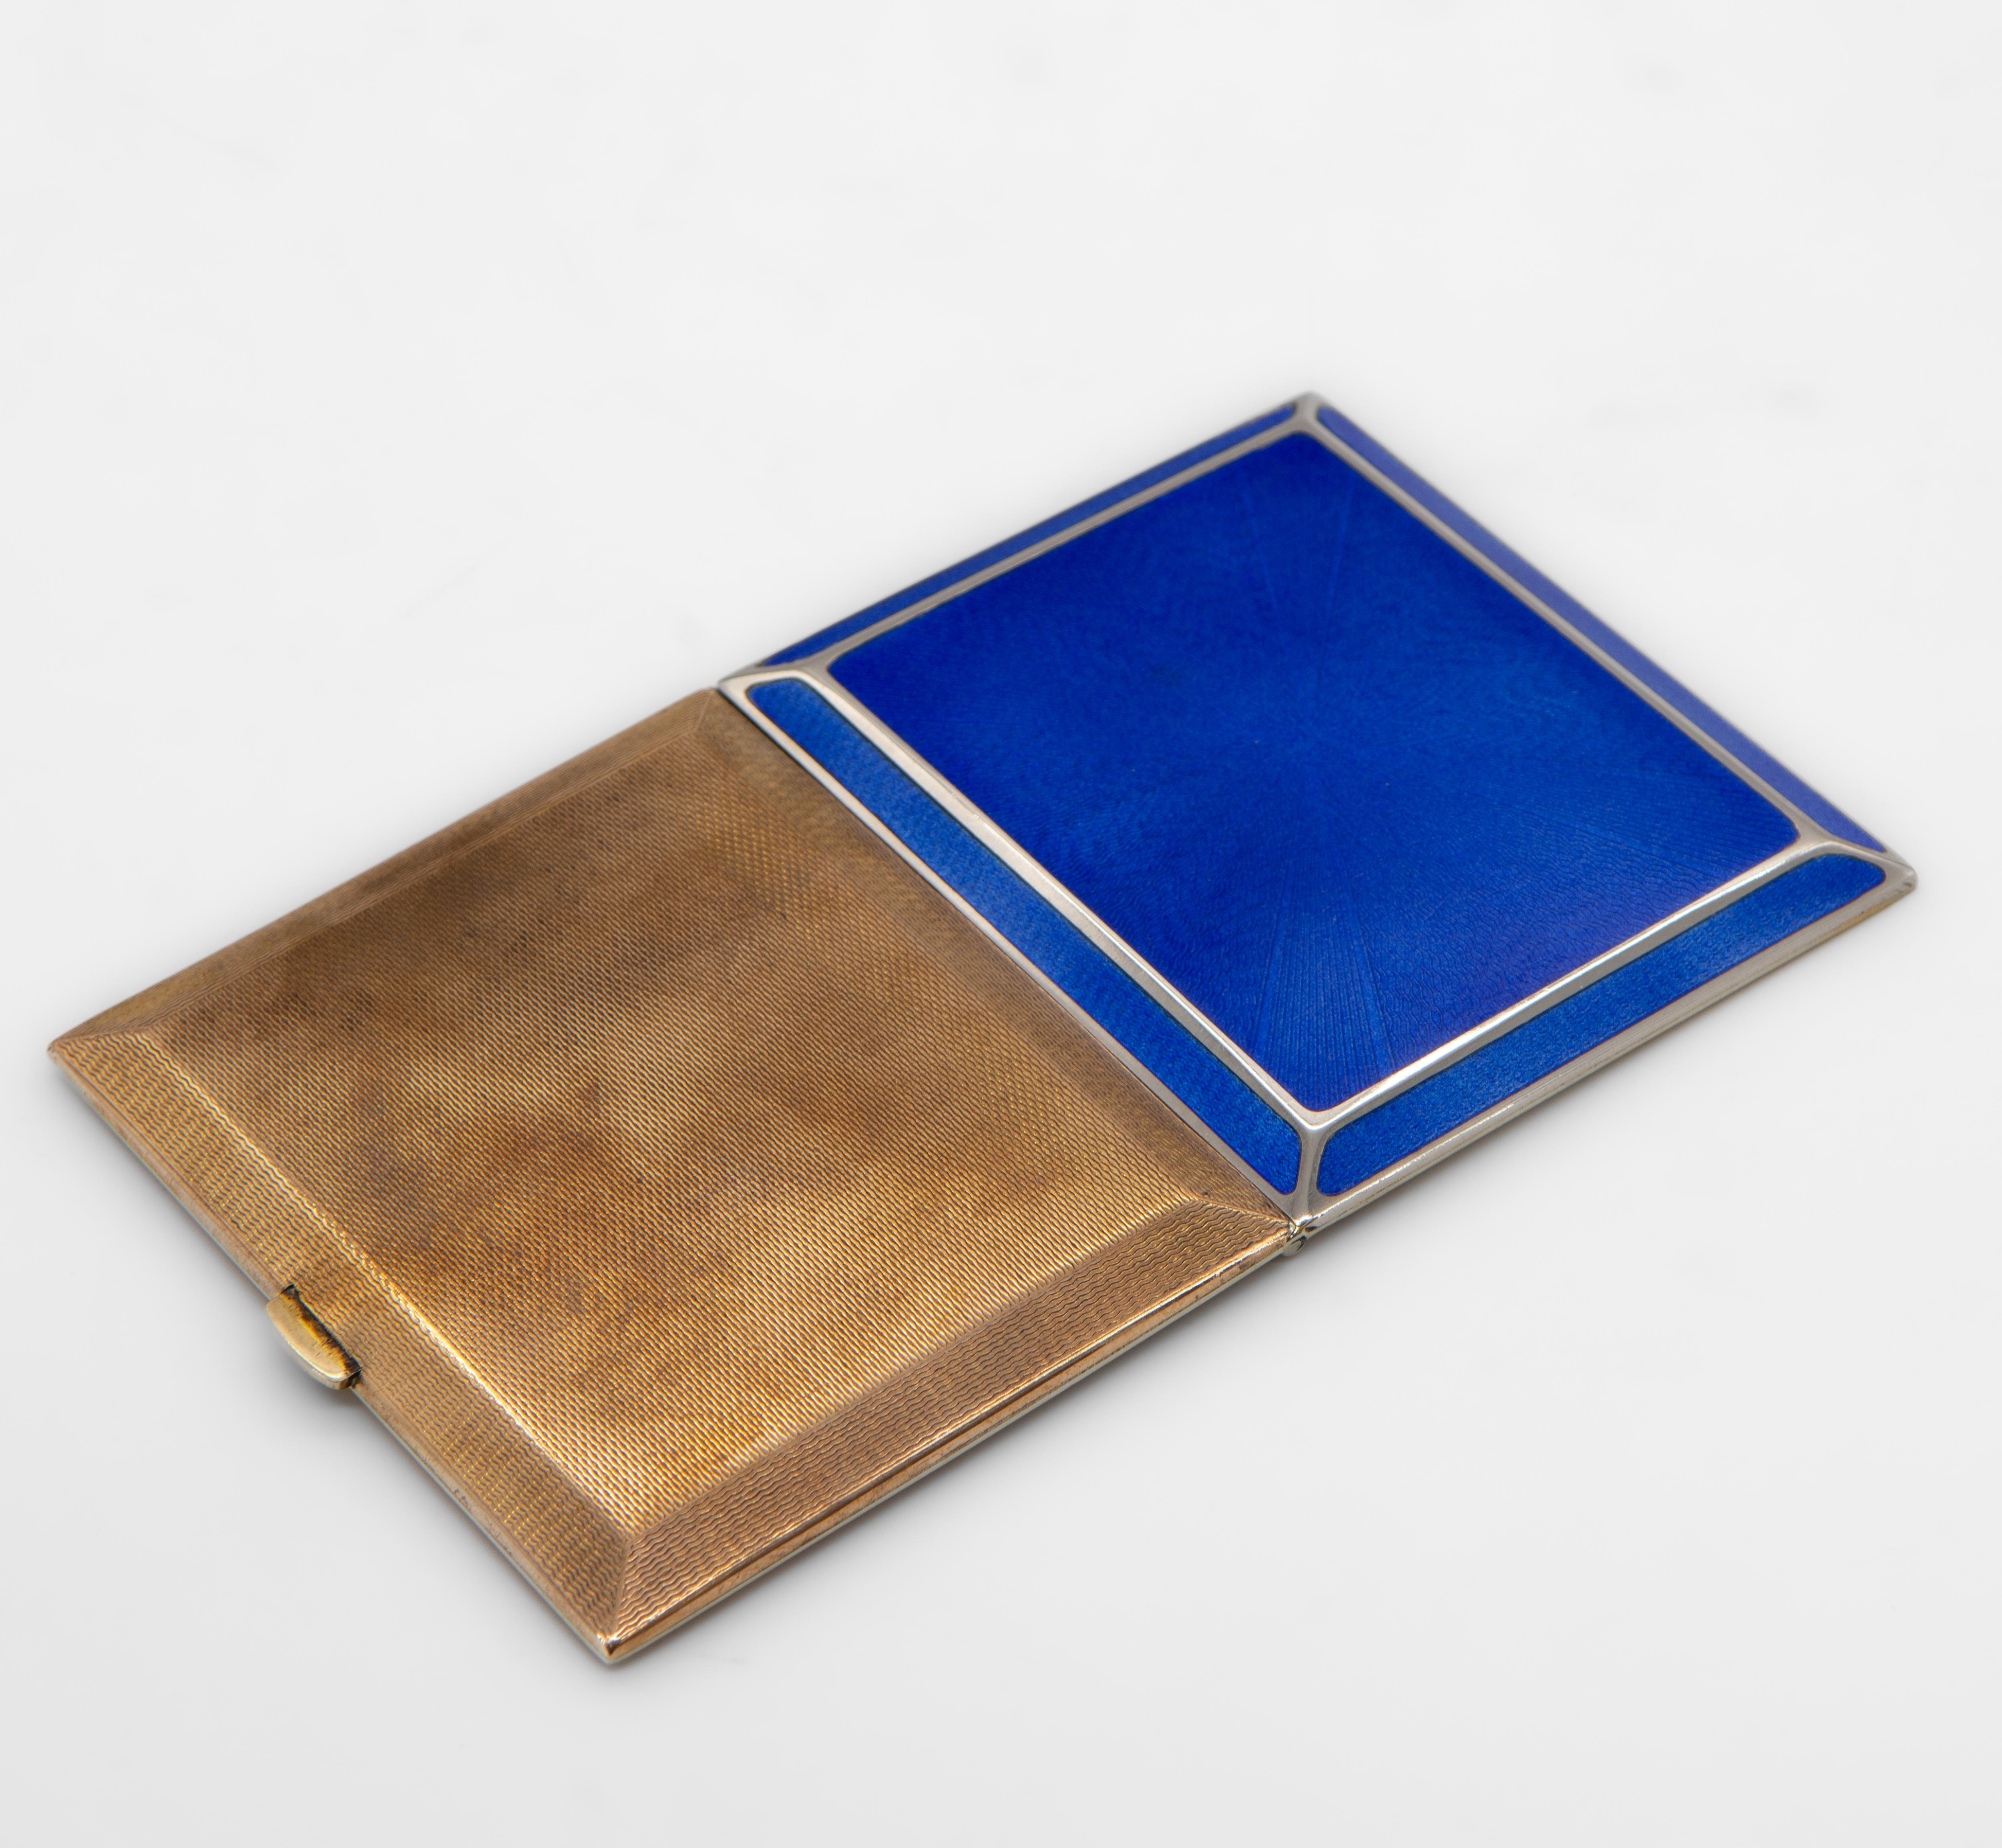  Art Deco period beautiful blue enamel sunburst, rolled gold & silver cigarette case. Circa 1930's. Marked 